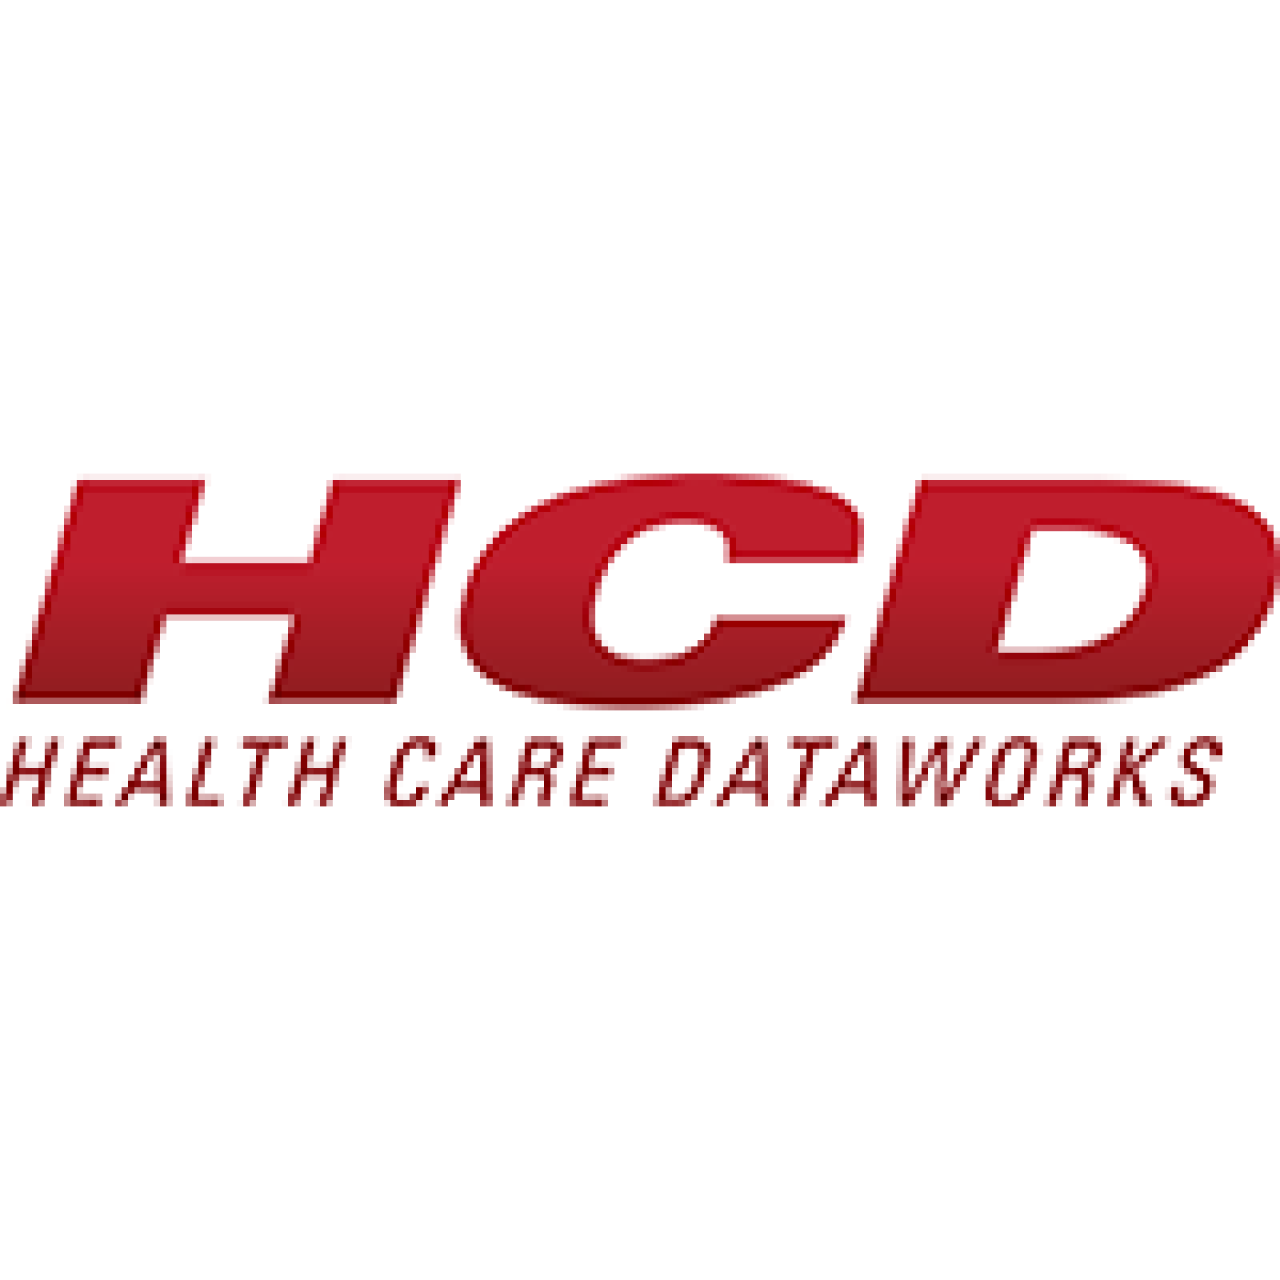 healthcare data works logo